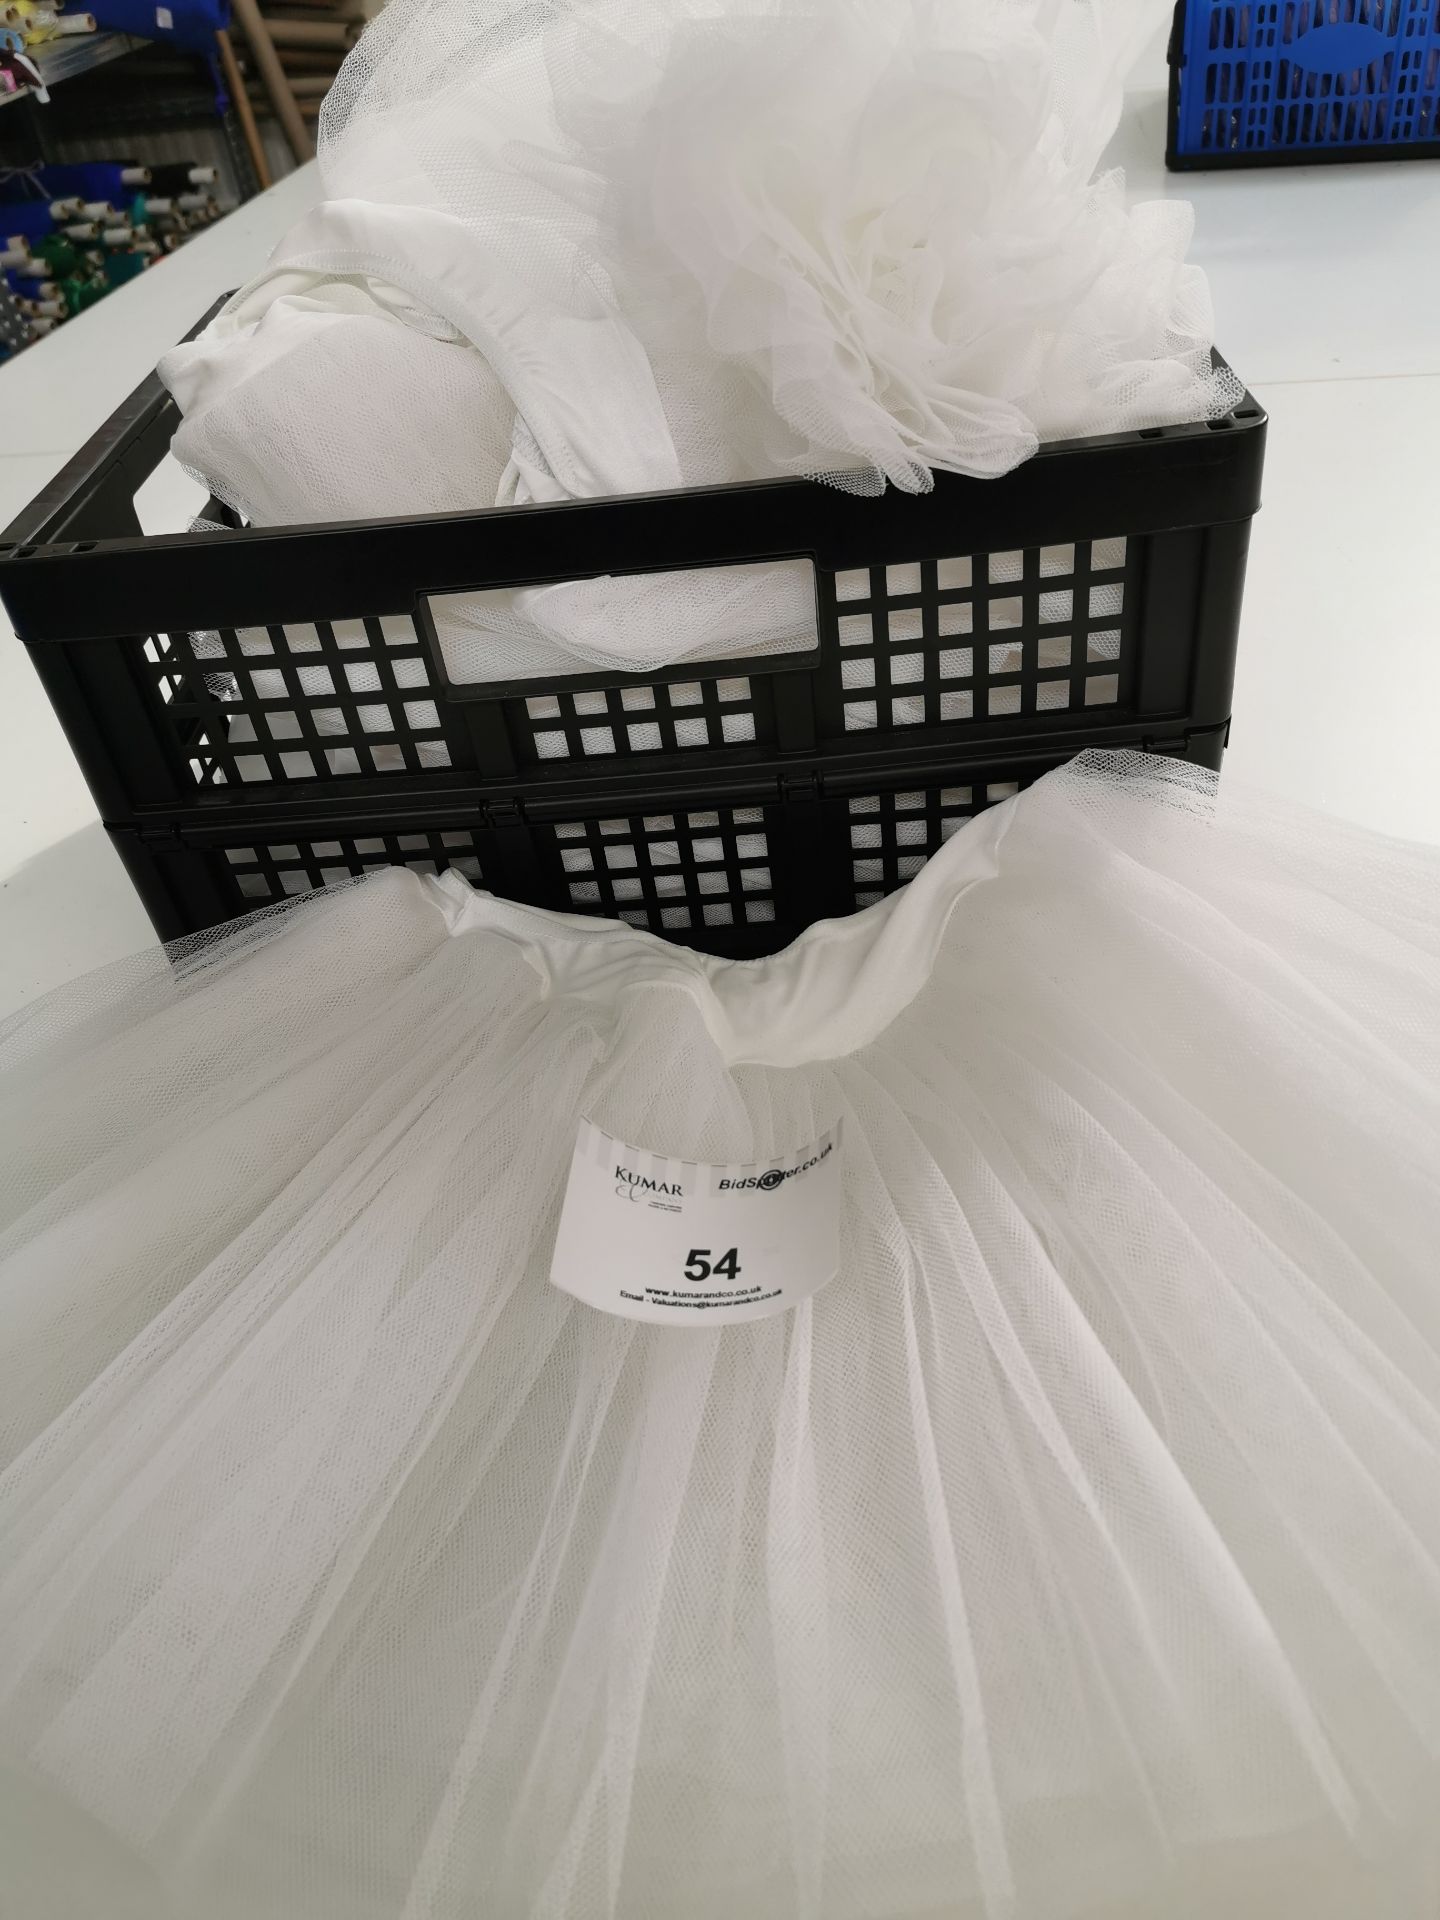 7pc White tutu skirts,Various sizes - Image 2 of 3